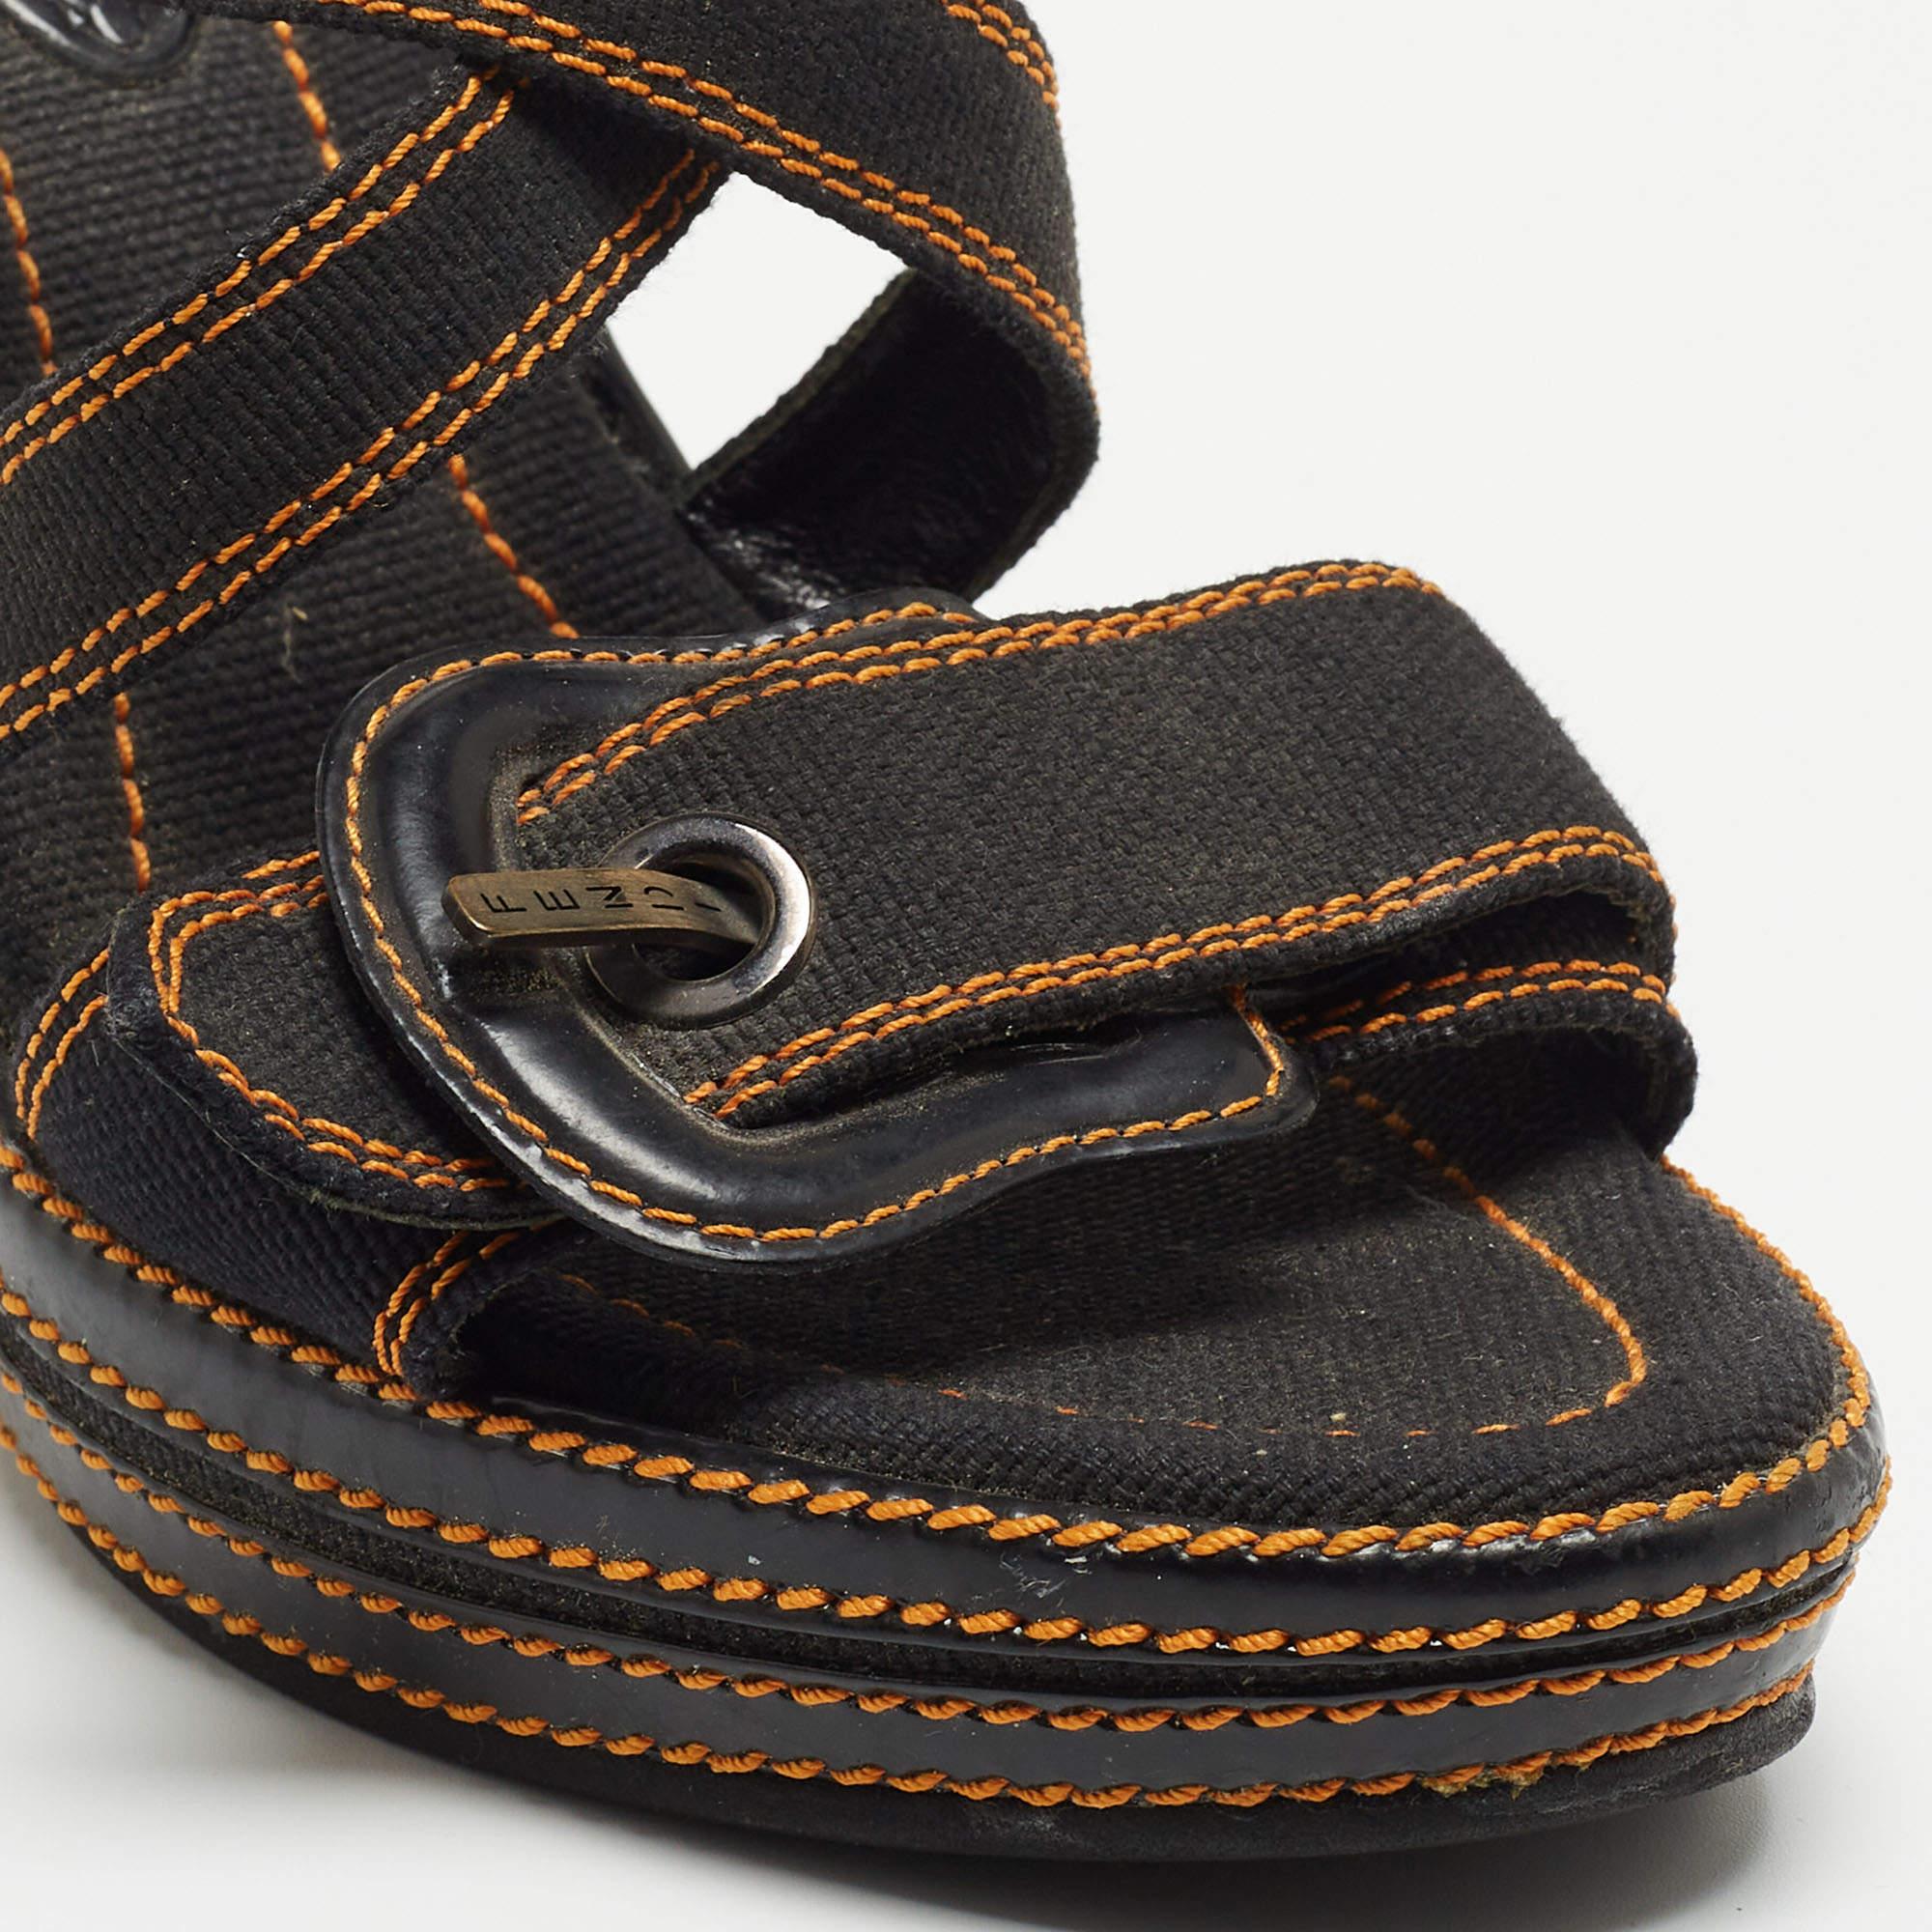 Fendi Black Canvas B Buckle Platform Wedge Sandals Size 39.5 1